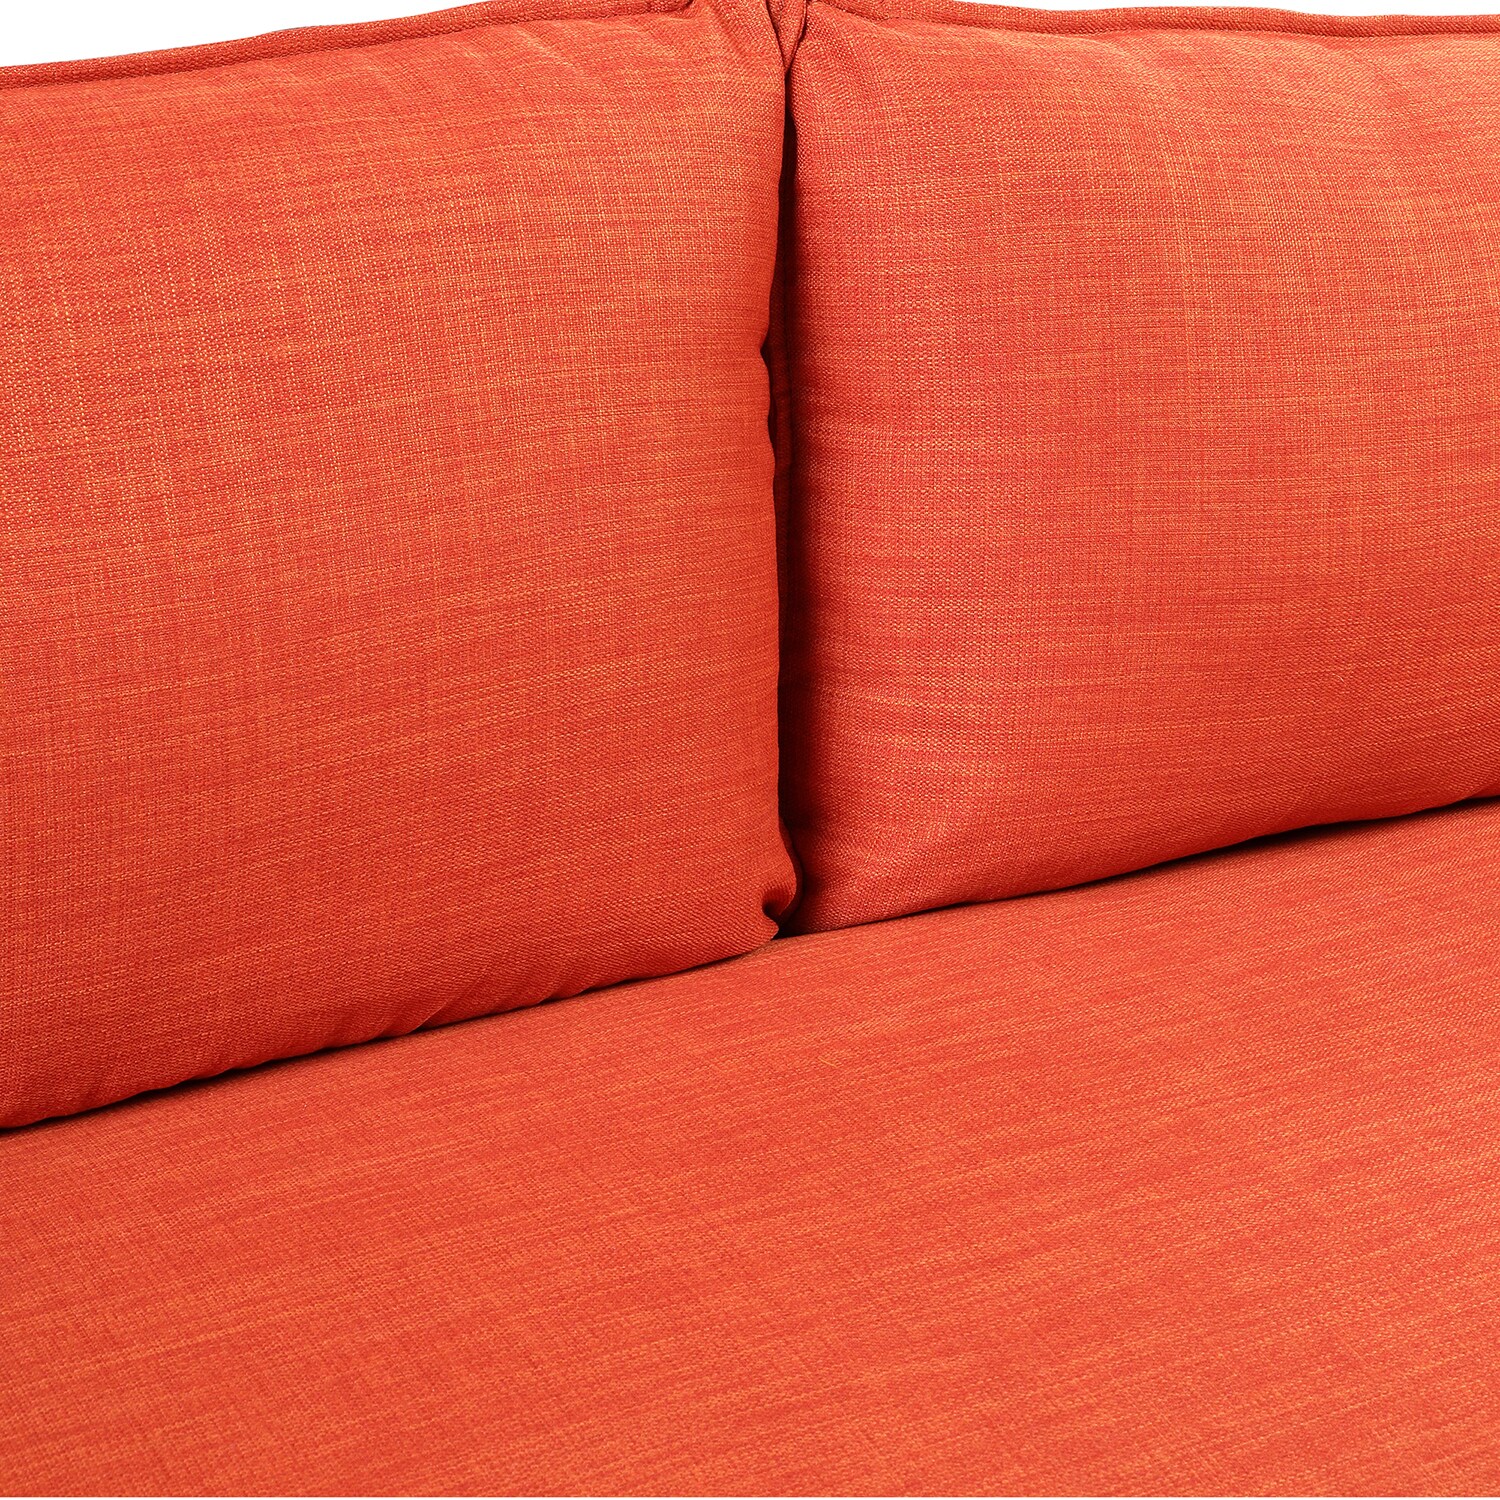 Cojín Lumbar tela naranja Sofá cama dormitorio cojín - China La industria  textil y la cortina de tela jacquard precio